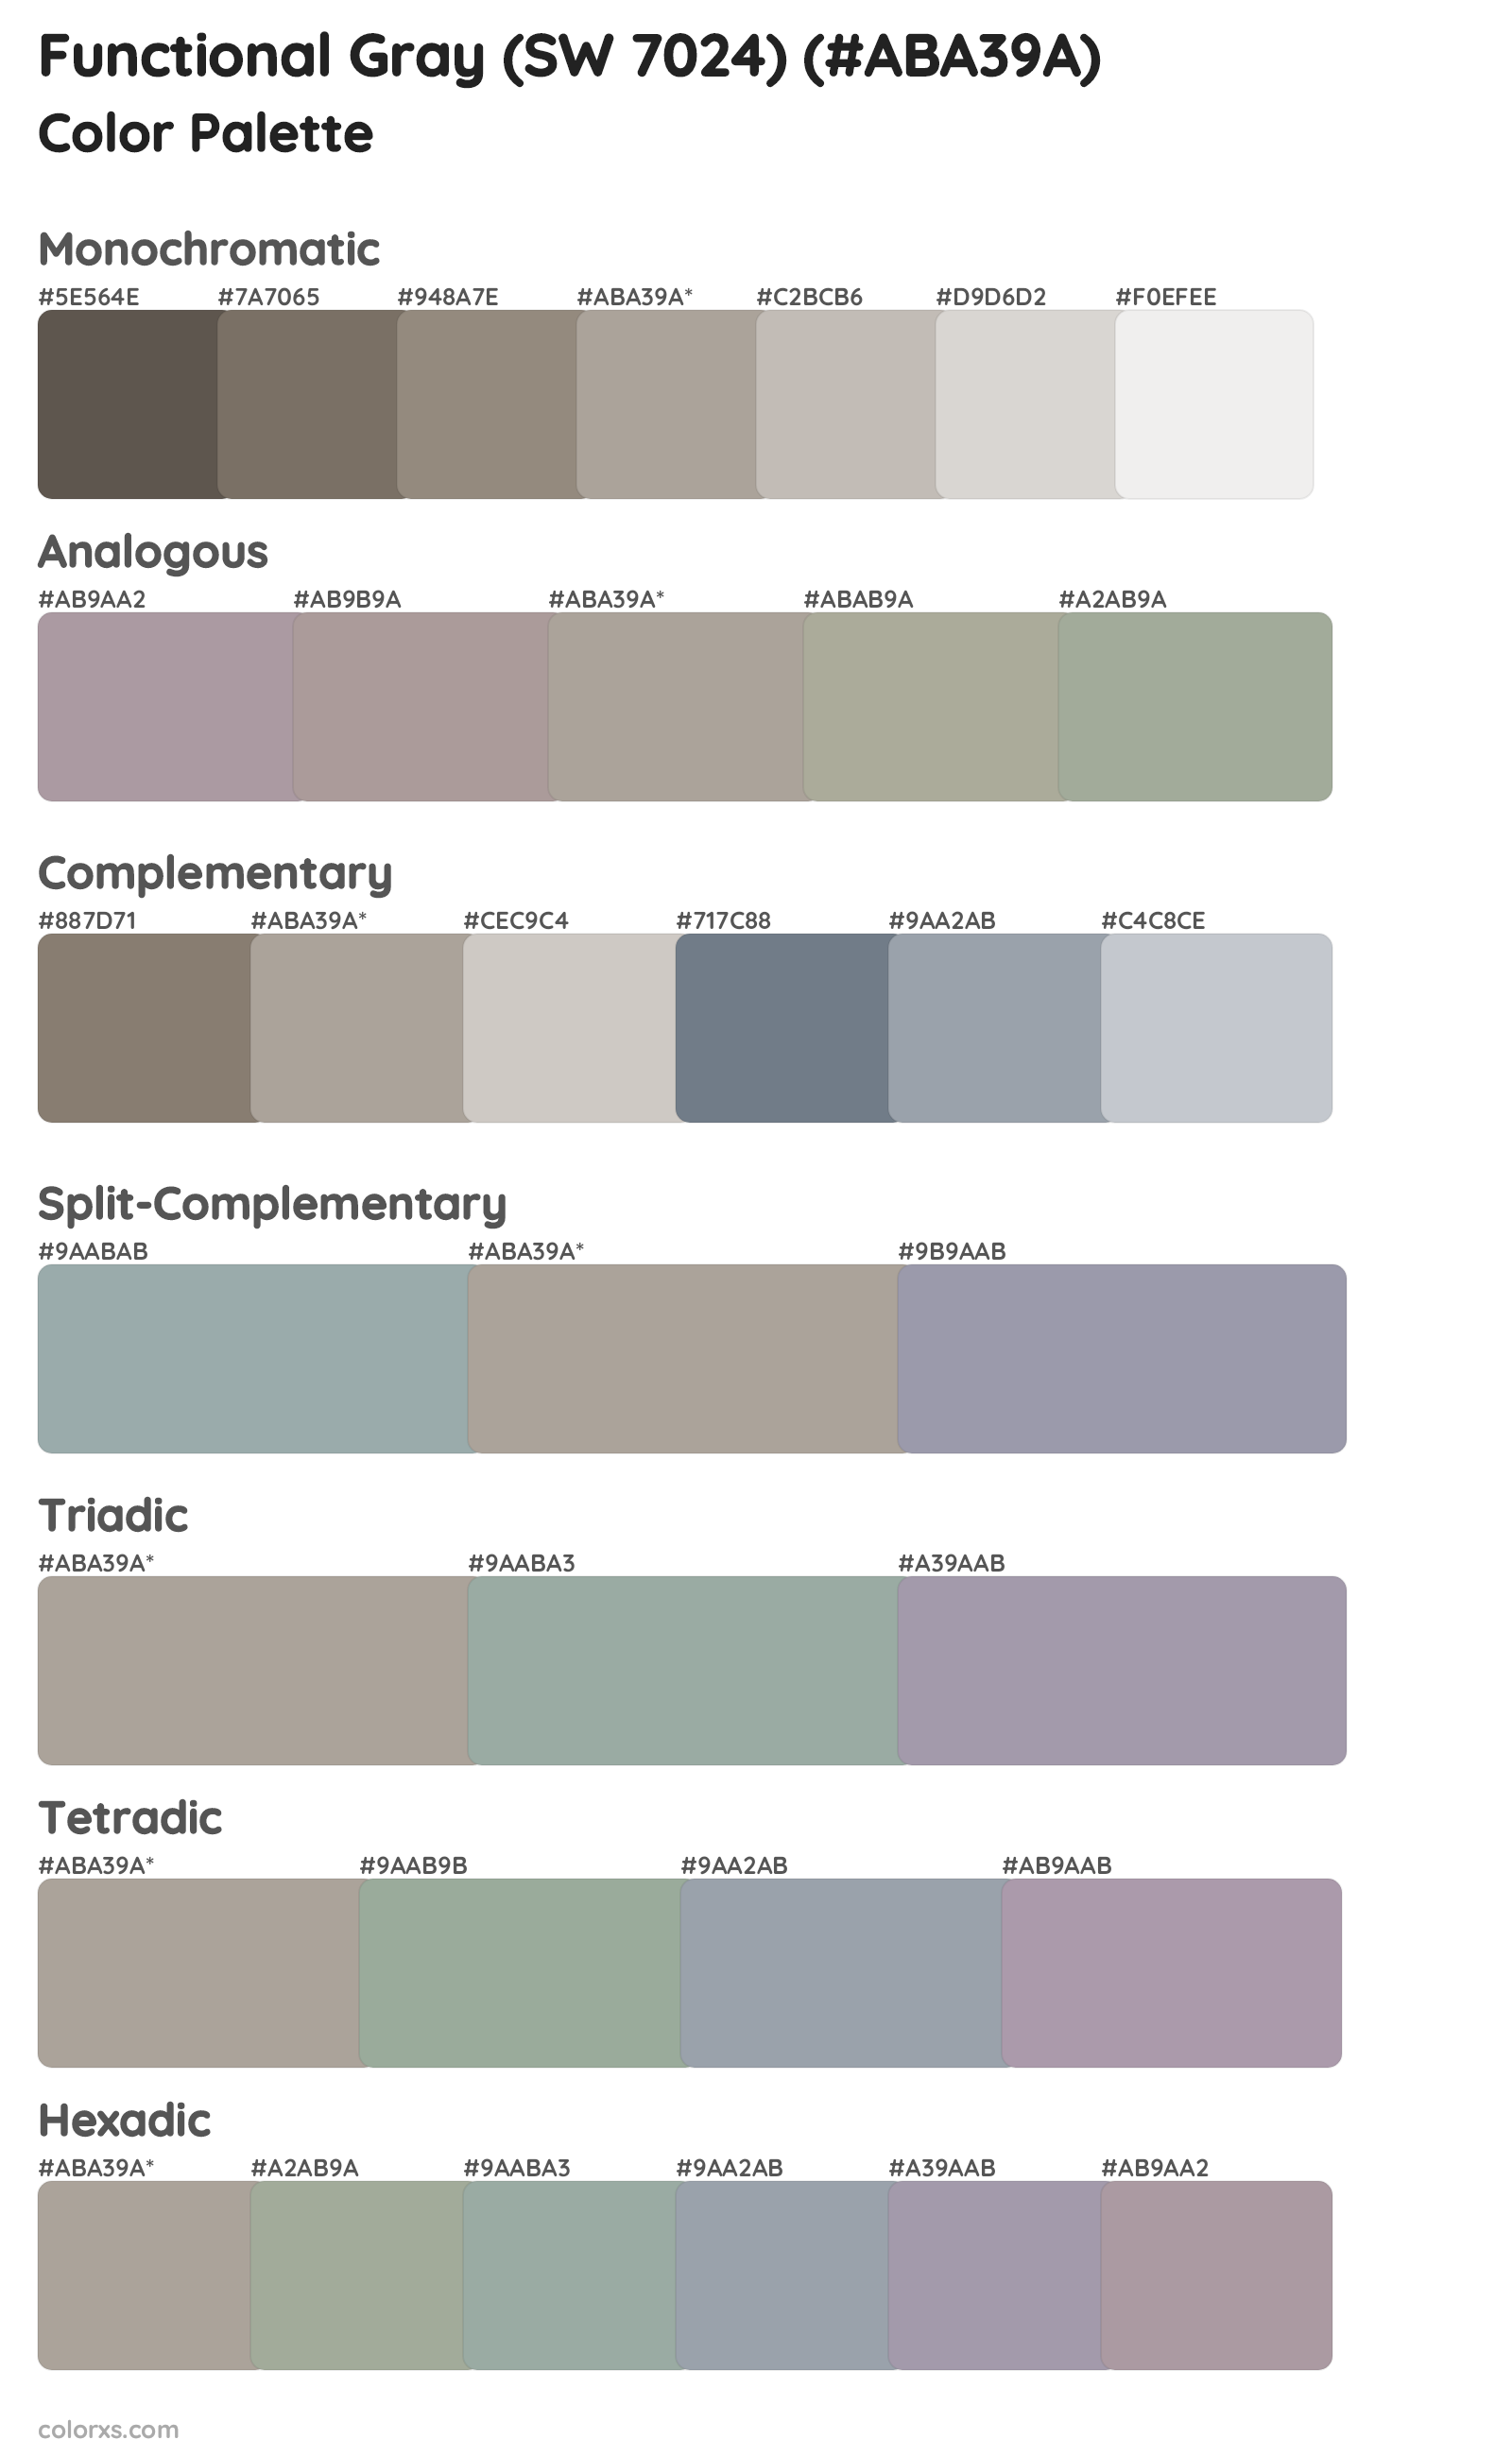 Functional Gray (SW 7024) Color Scheme Palettes